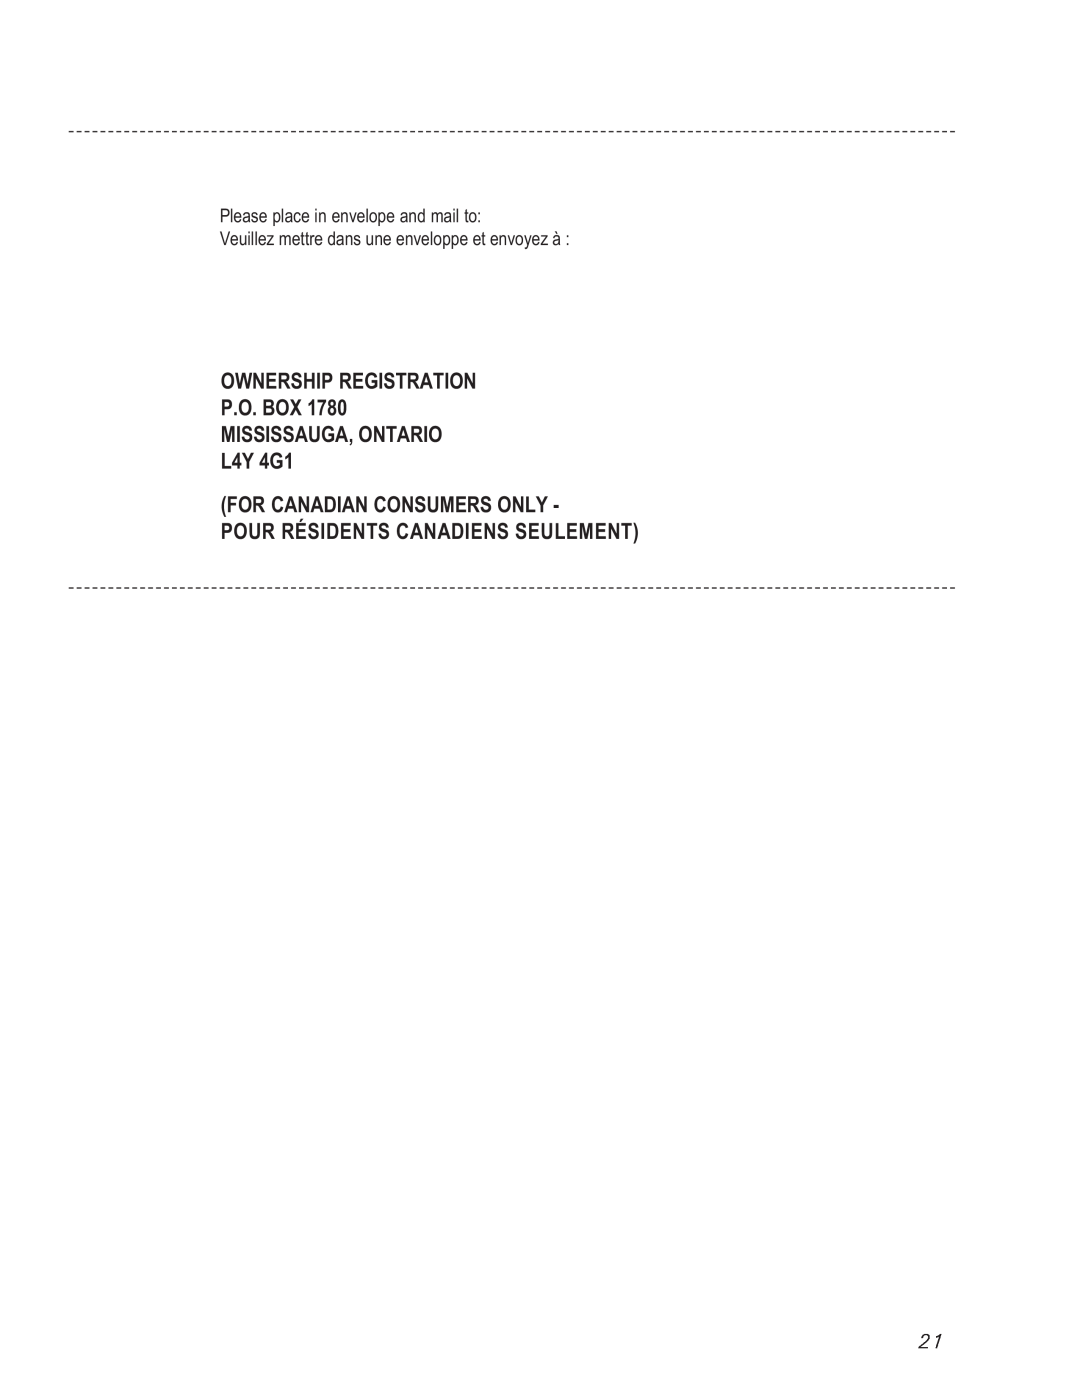 GE 350A4502P592 02-07 ATS manual OWNERSHIP REGISTRATION P.O. BOX MISSISSAUGA, ONTARIO L4Y 4G1 